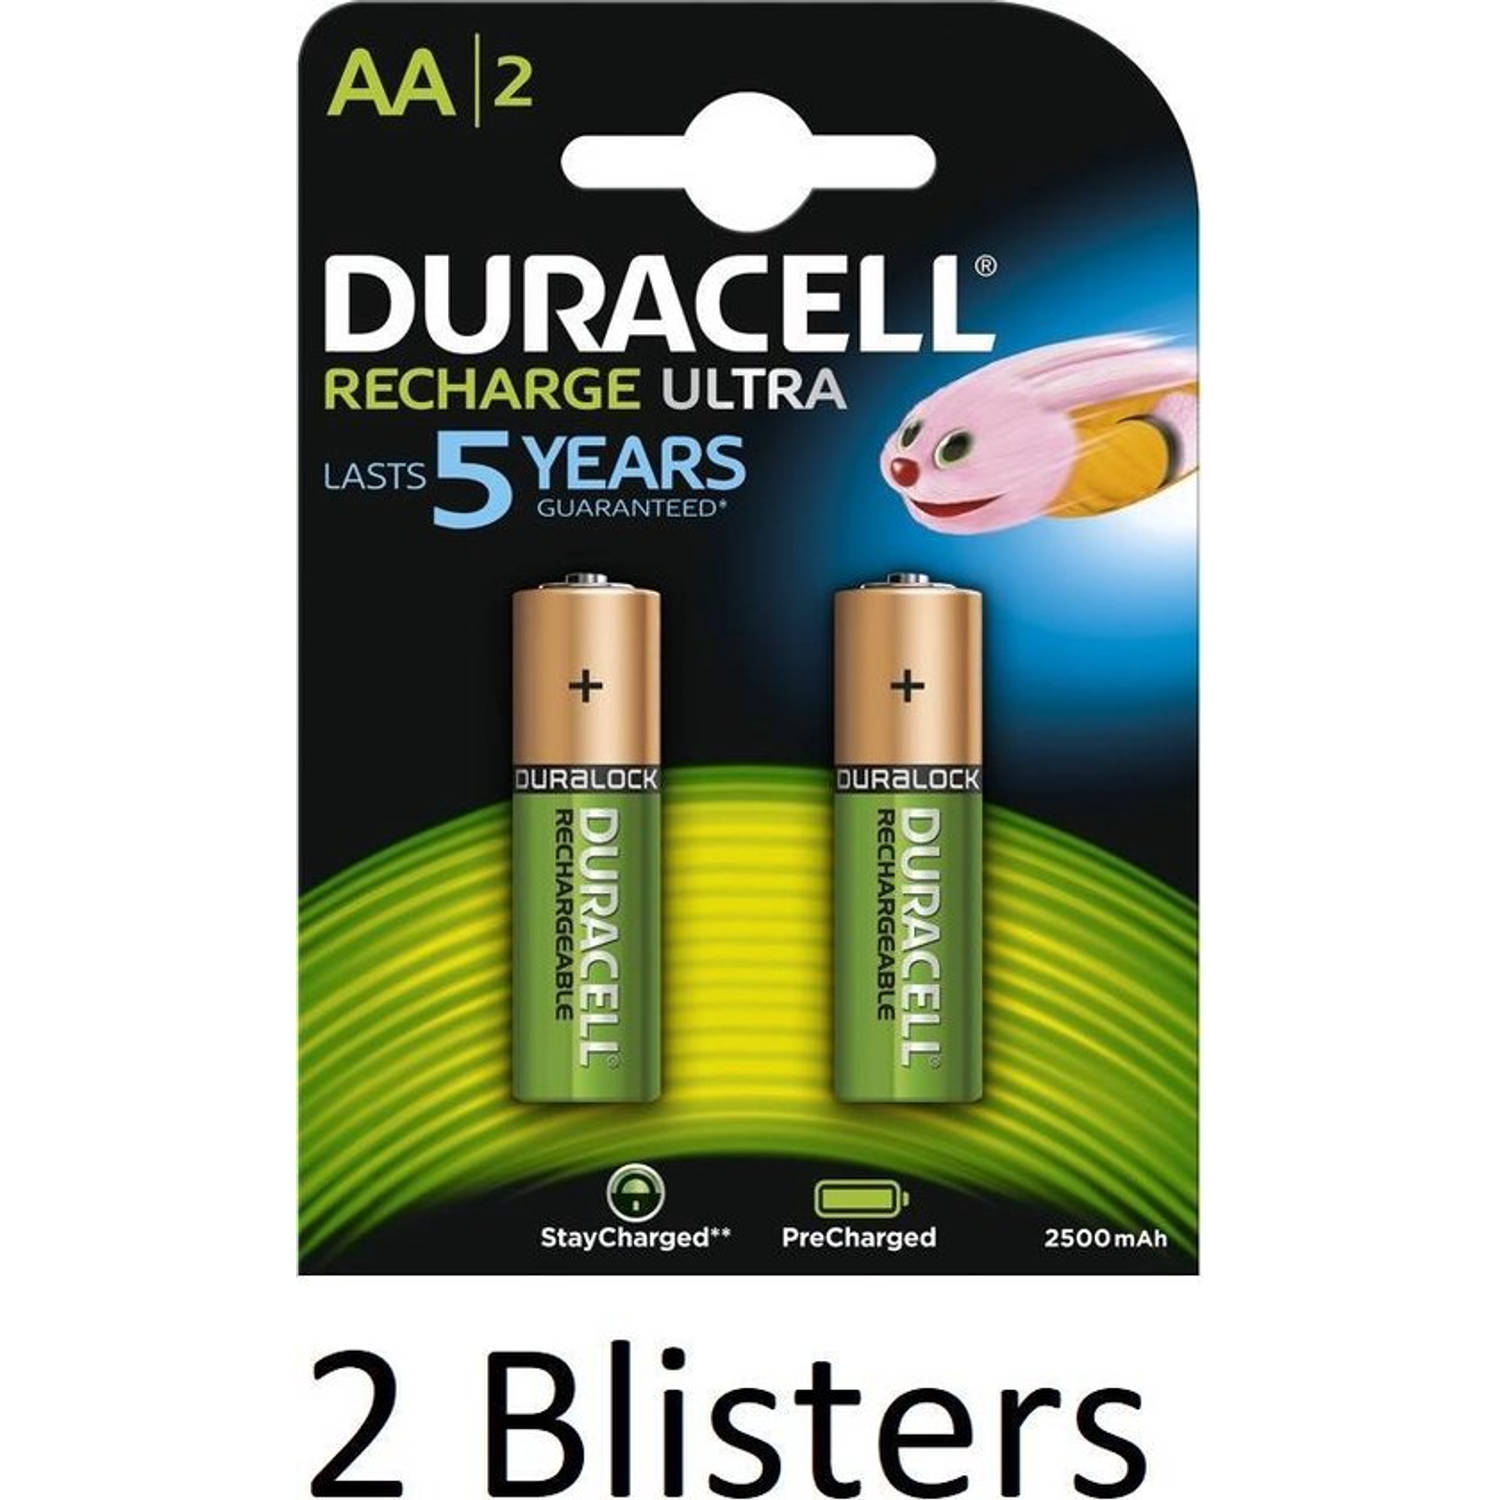 stad Asser Vernederen 4 Stuks (2 Blisters a 2 st) Duracell AA Oplaadbare Batterijen - 2500 mAh |  Blokker